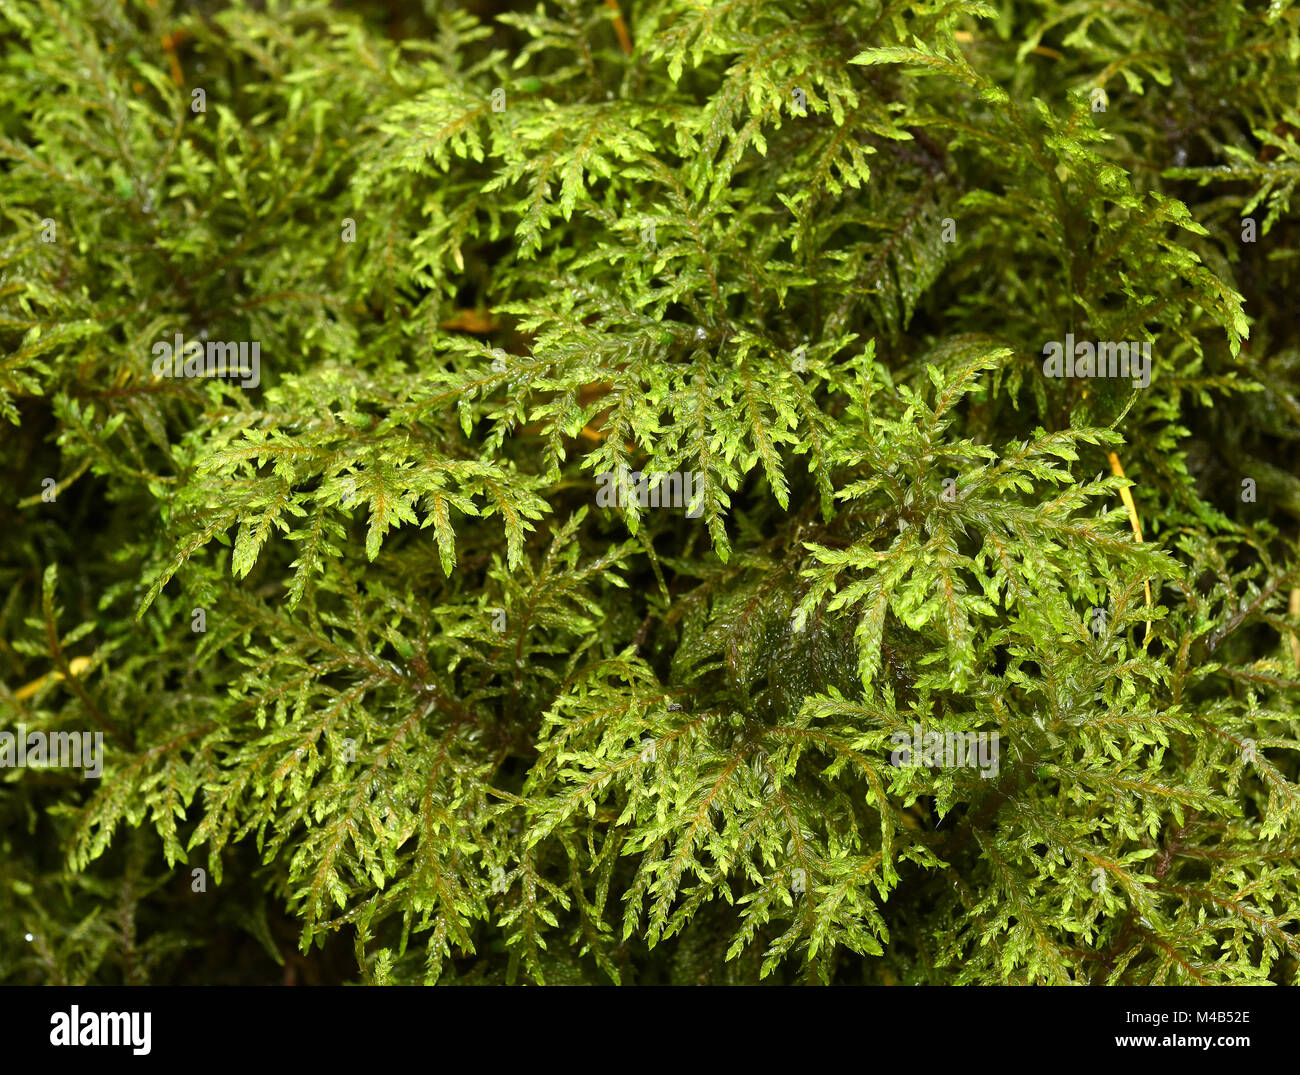 Moss; reluciente madera-moss; espléndido; stairstep feathermoss musgo; Foto de stock